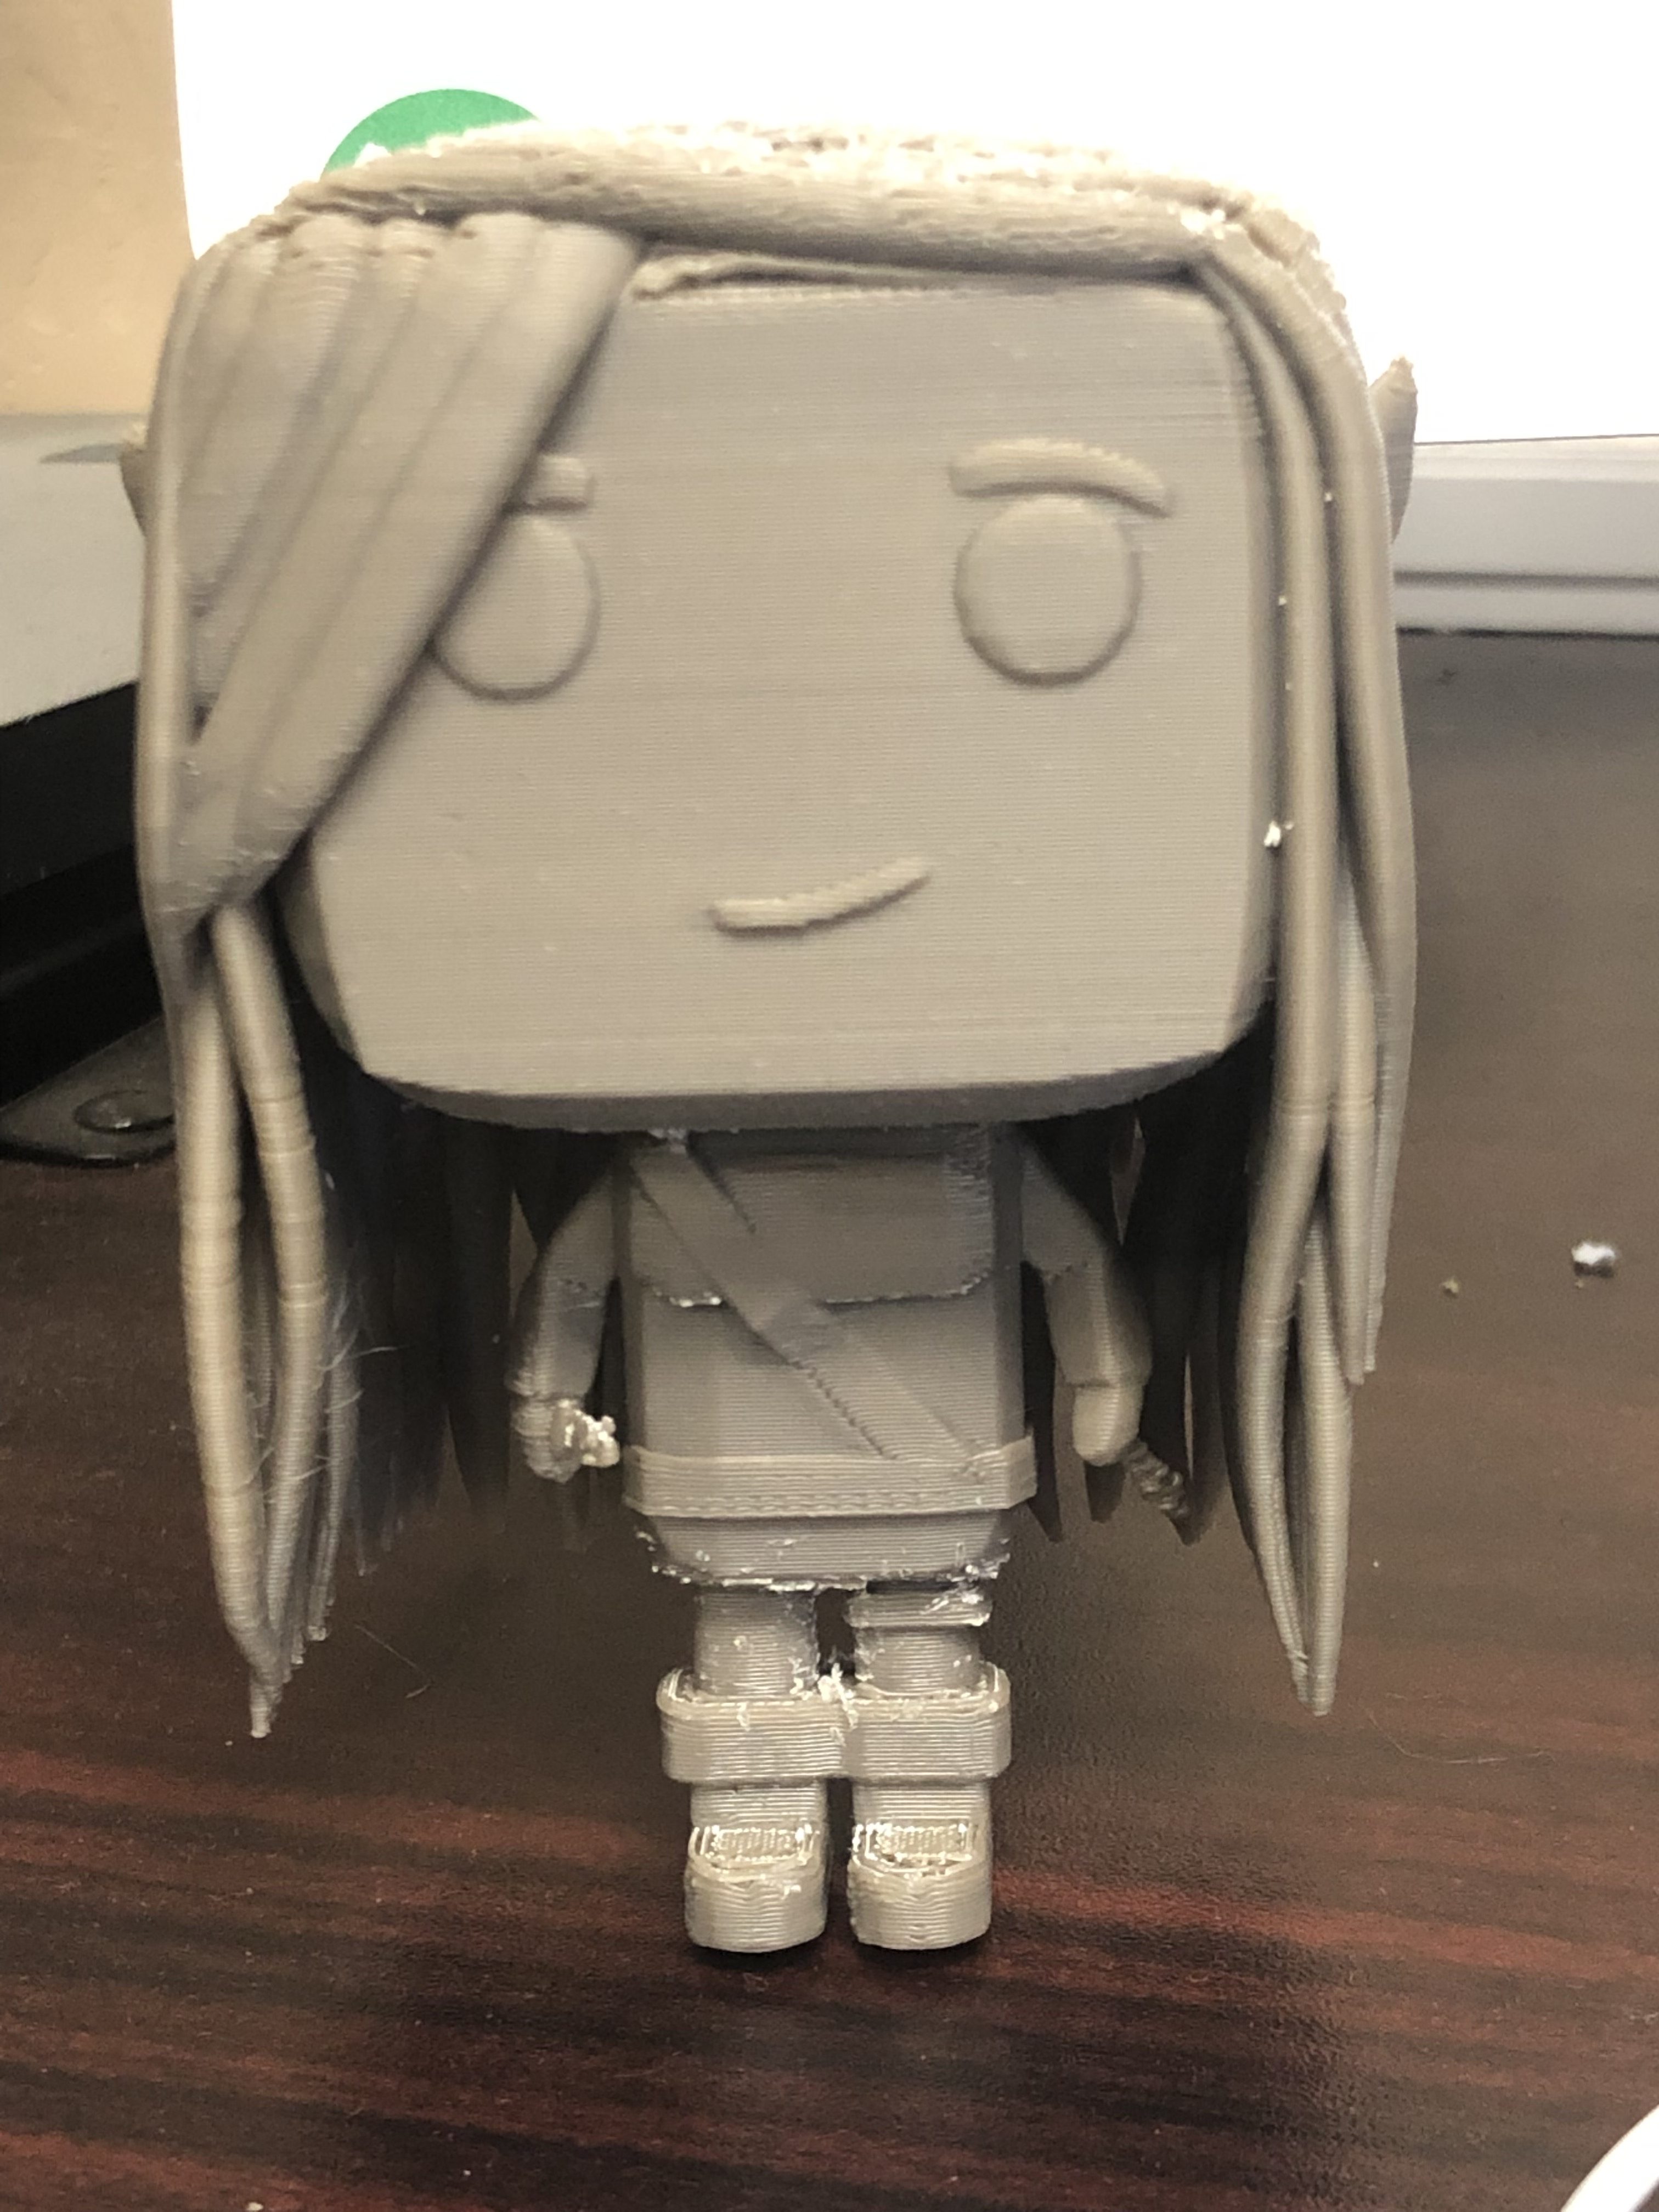 The 3D printed figurine